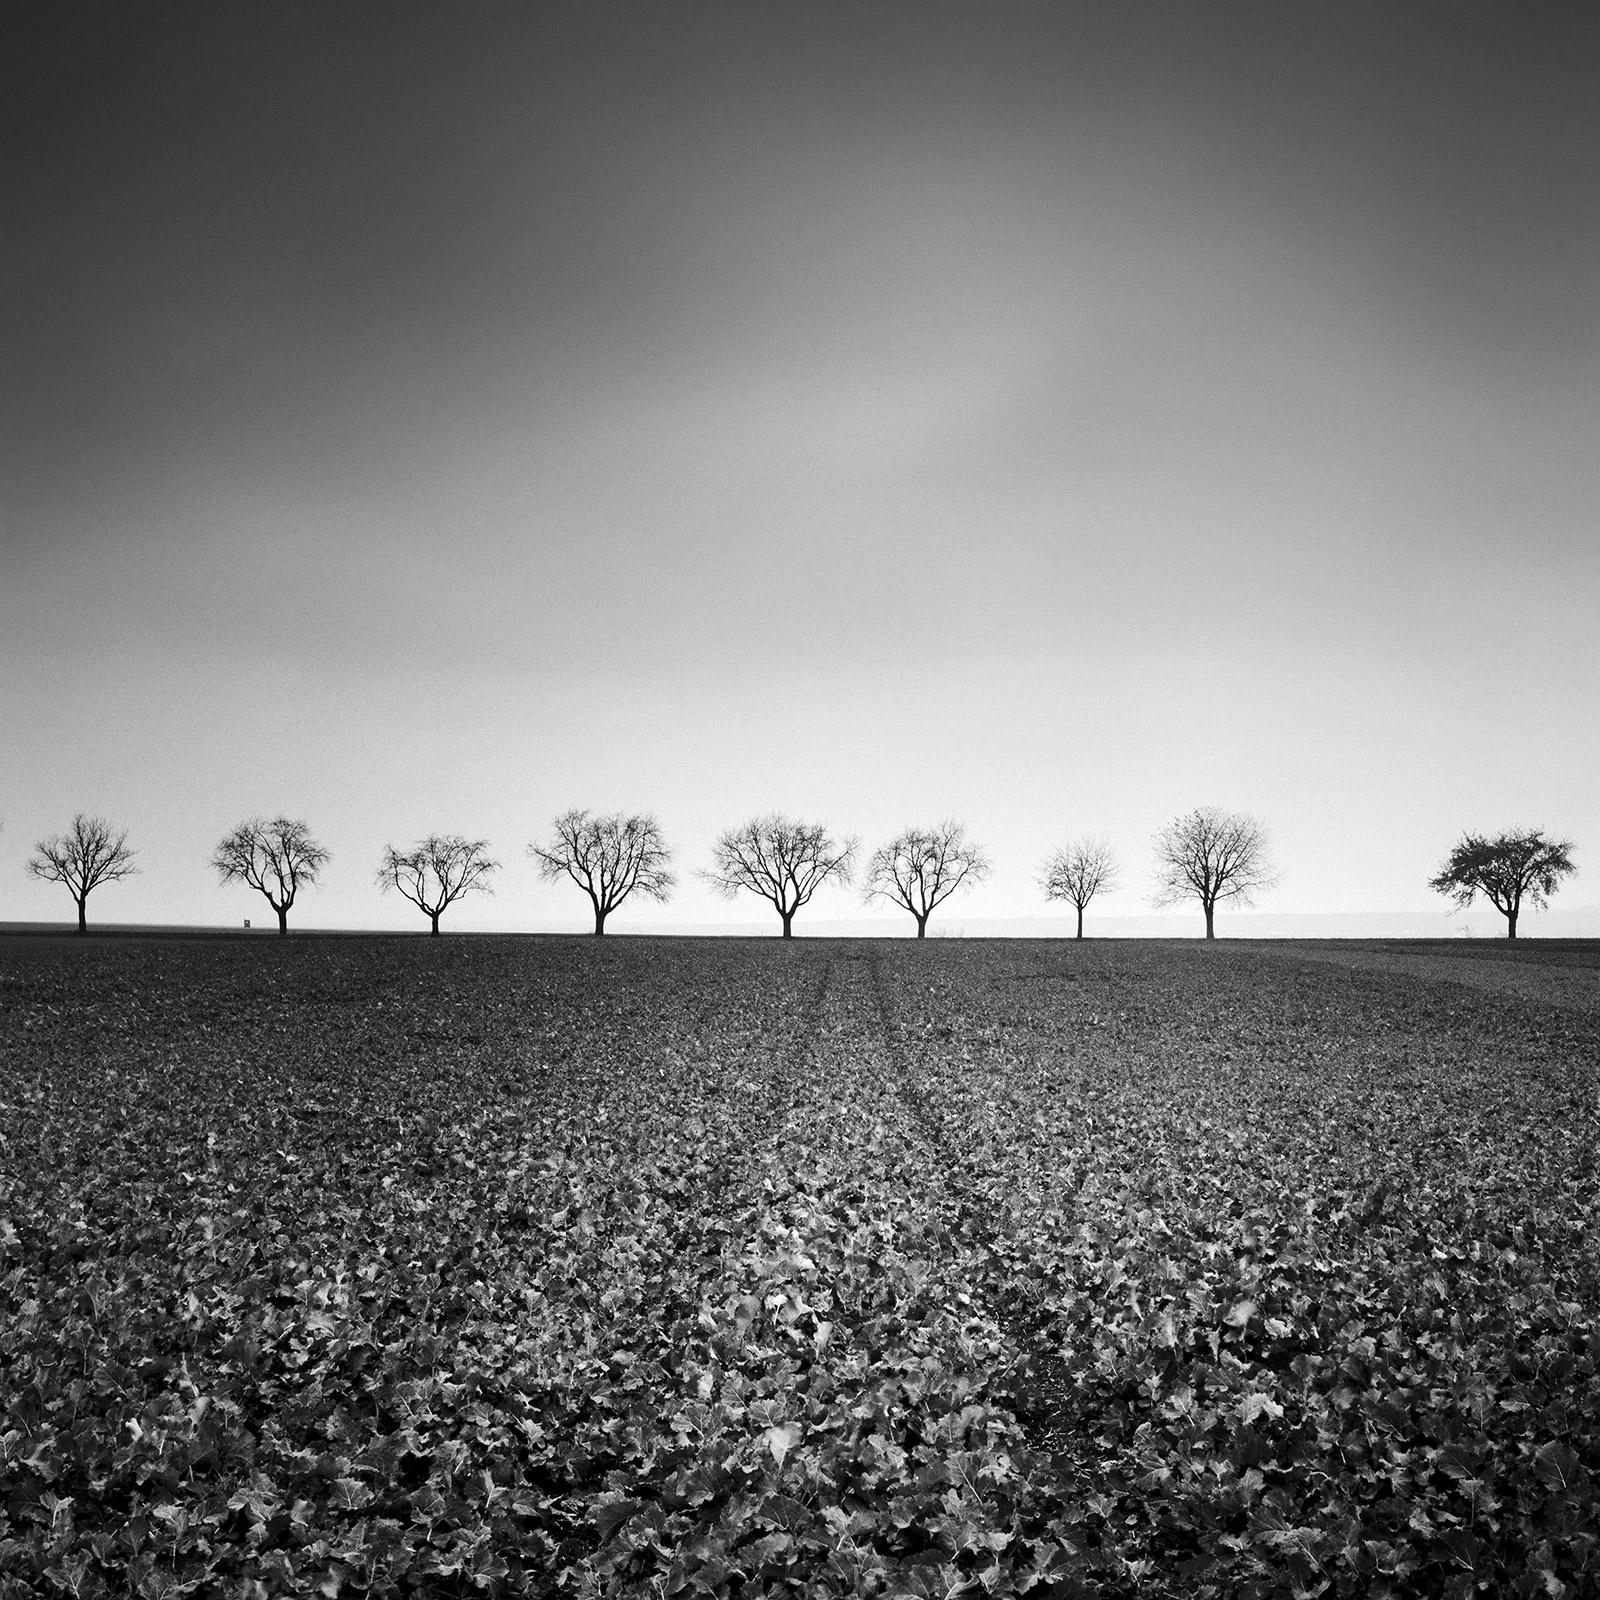 Nine Cherry Trees, Avenue, Austria, black and white landscape photography